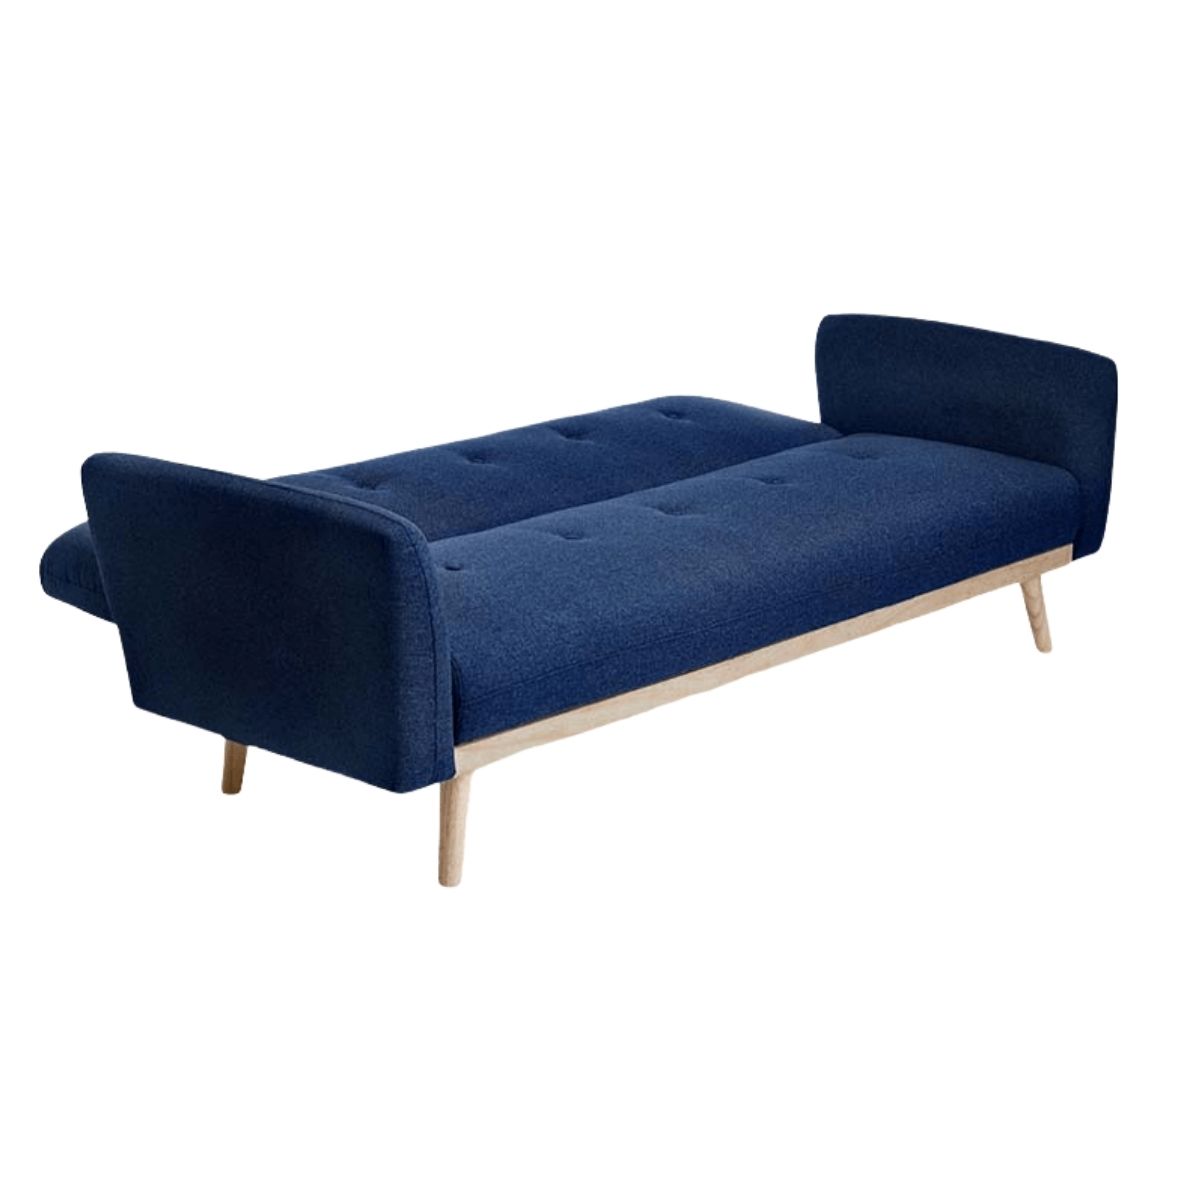 Nicholas 3-Seater Blue Foldable Sofa Bed.